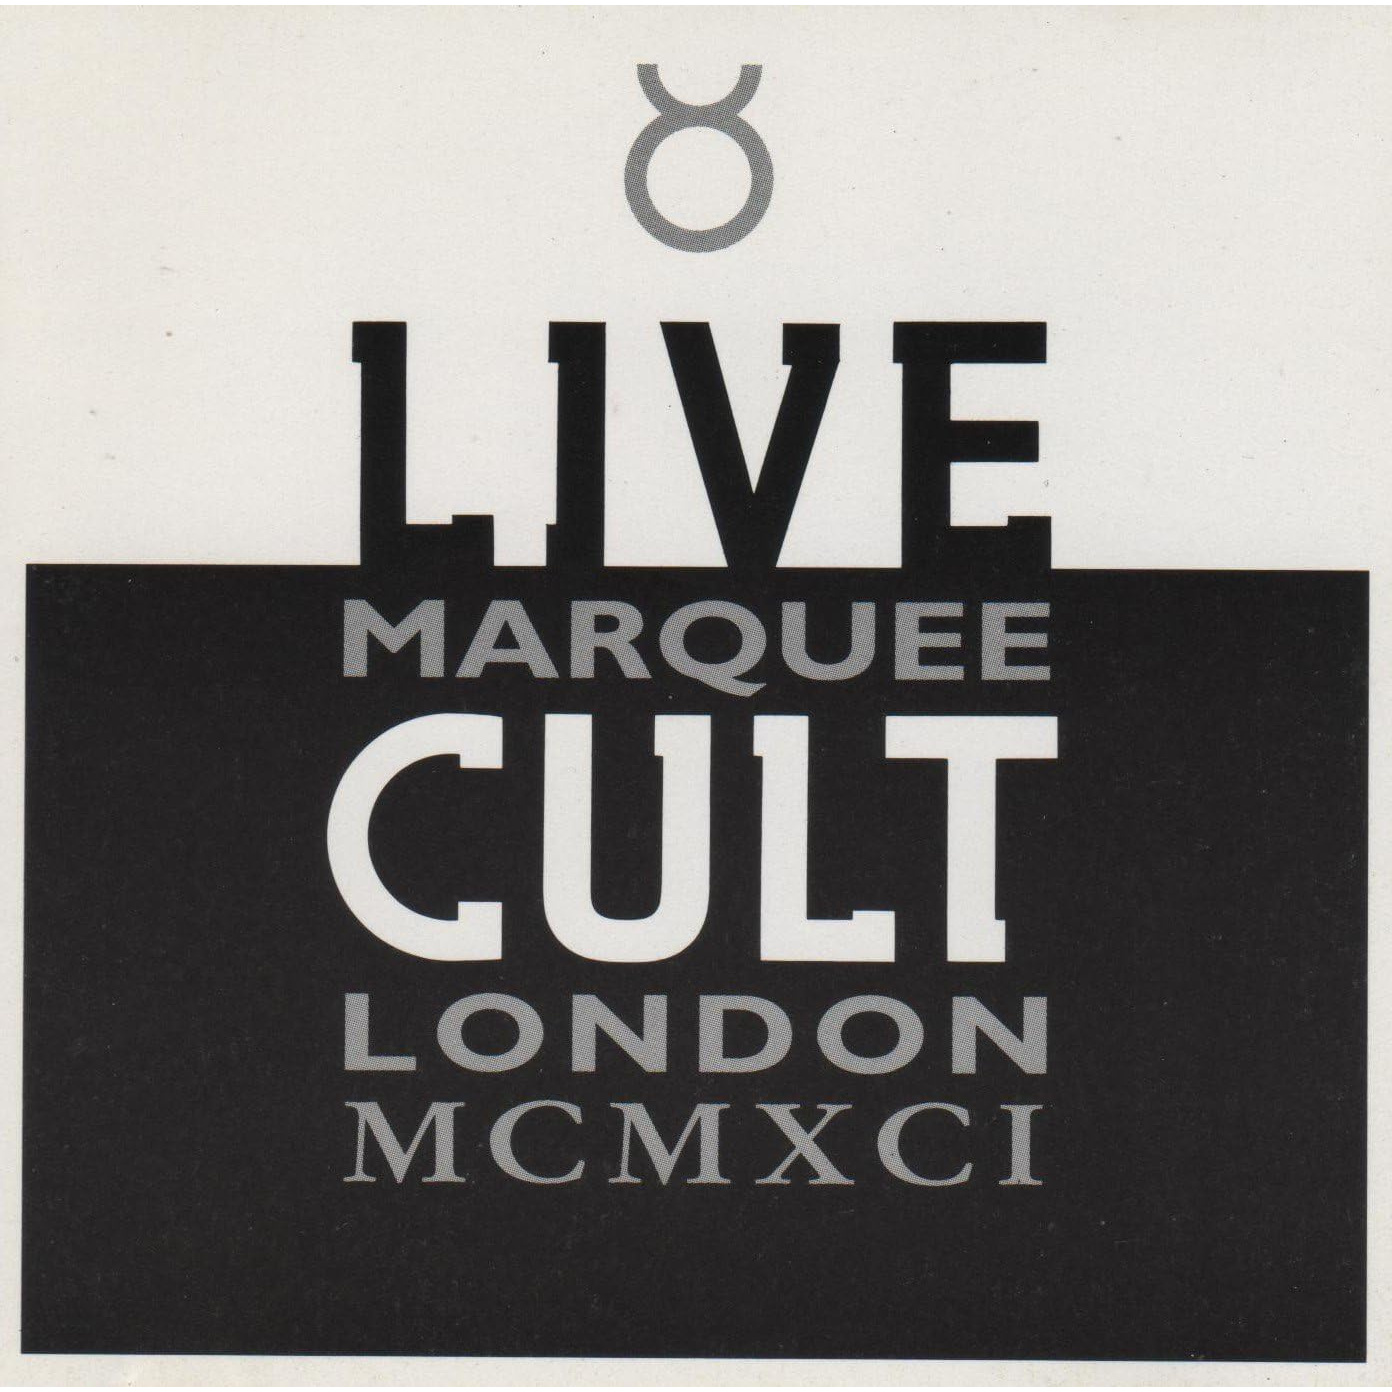 BBC RADIO ONE (MARQUEE, LONDON 1991)